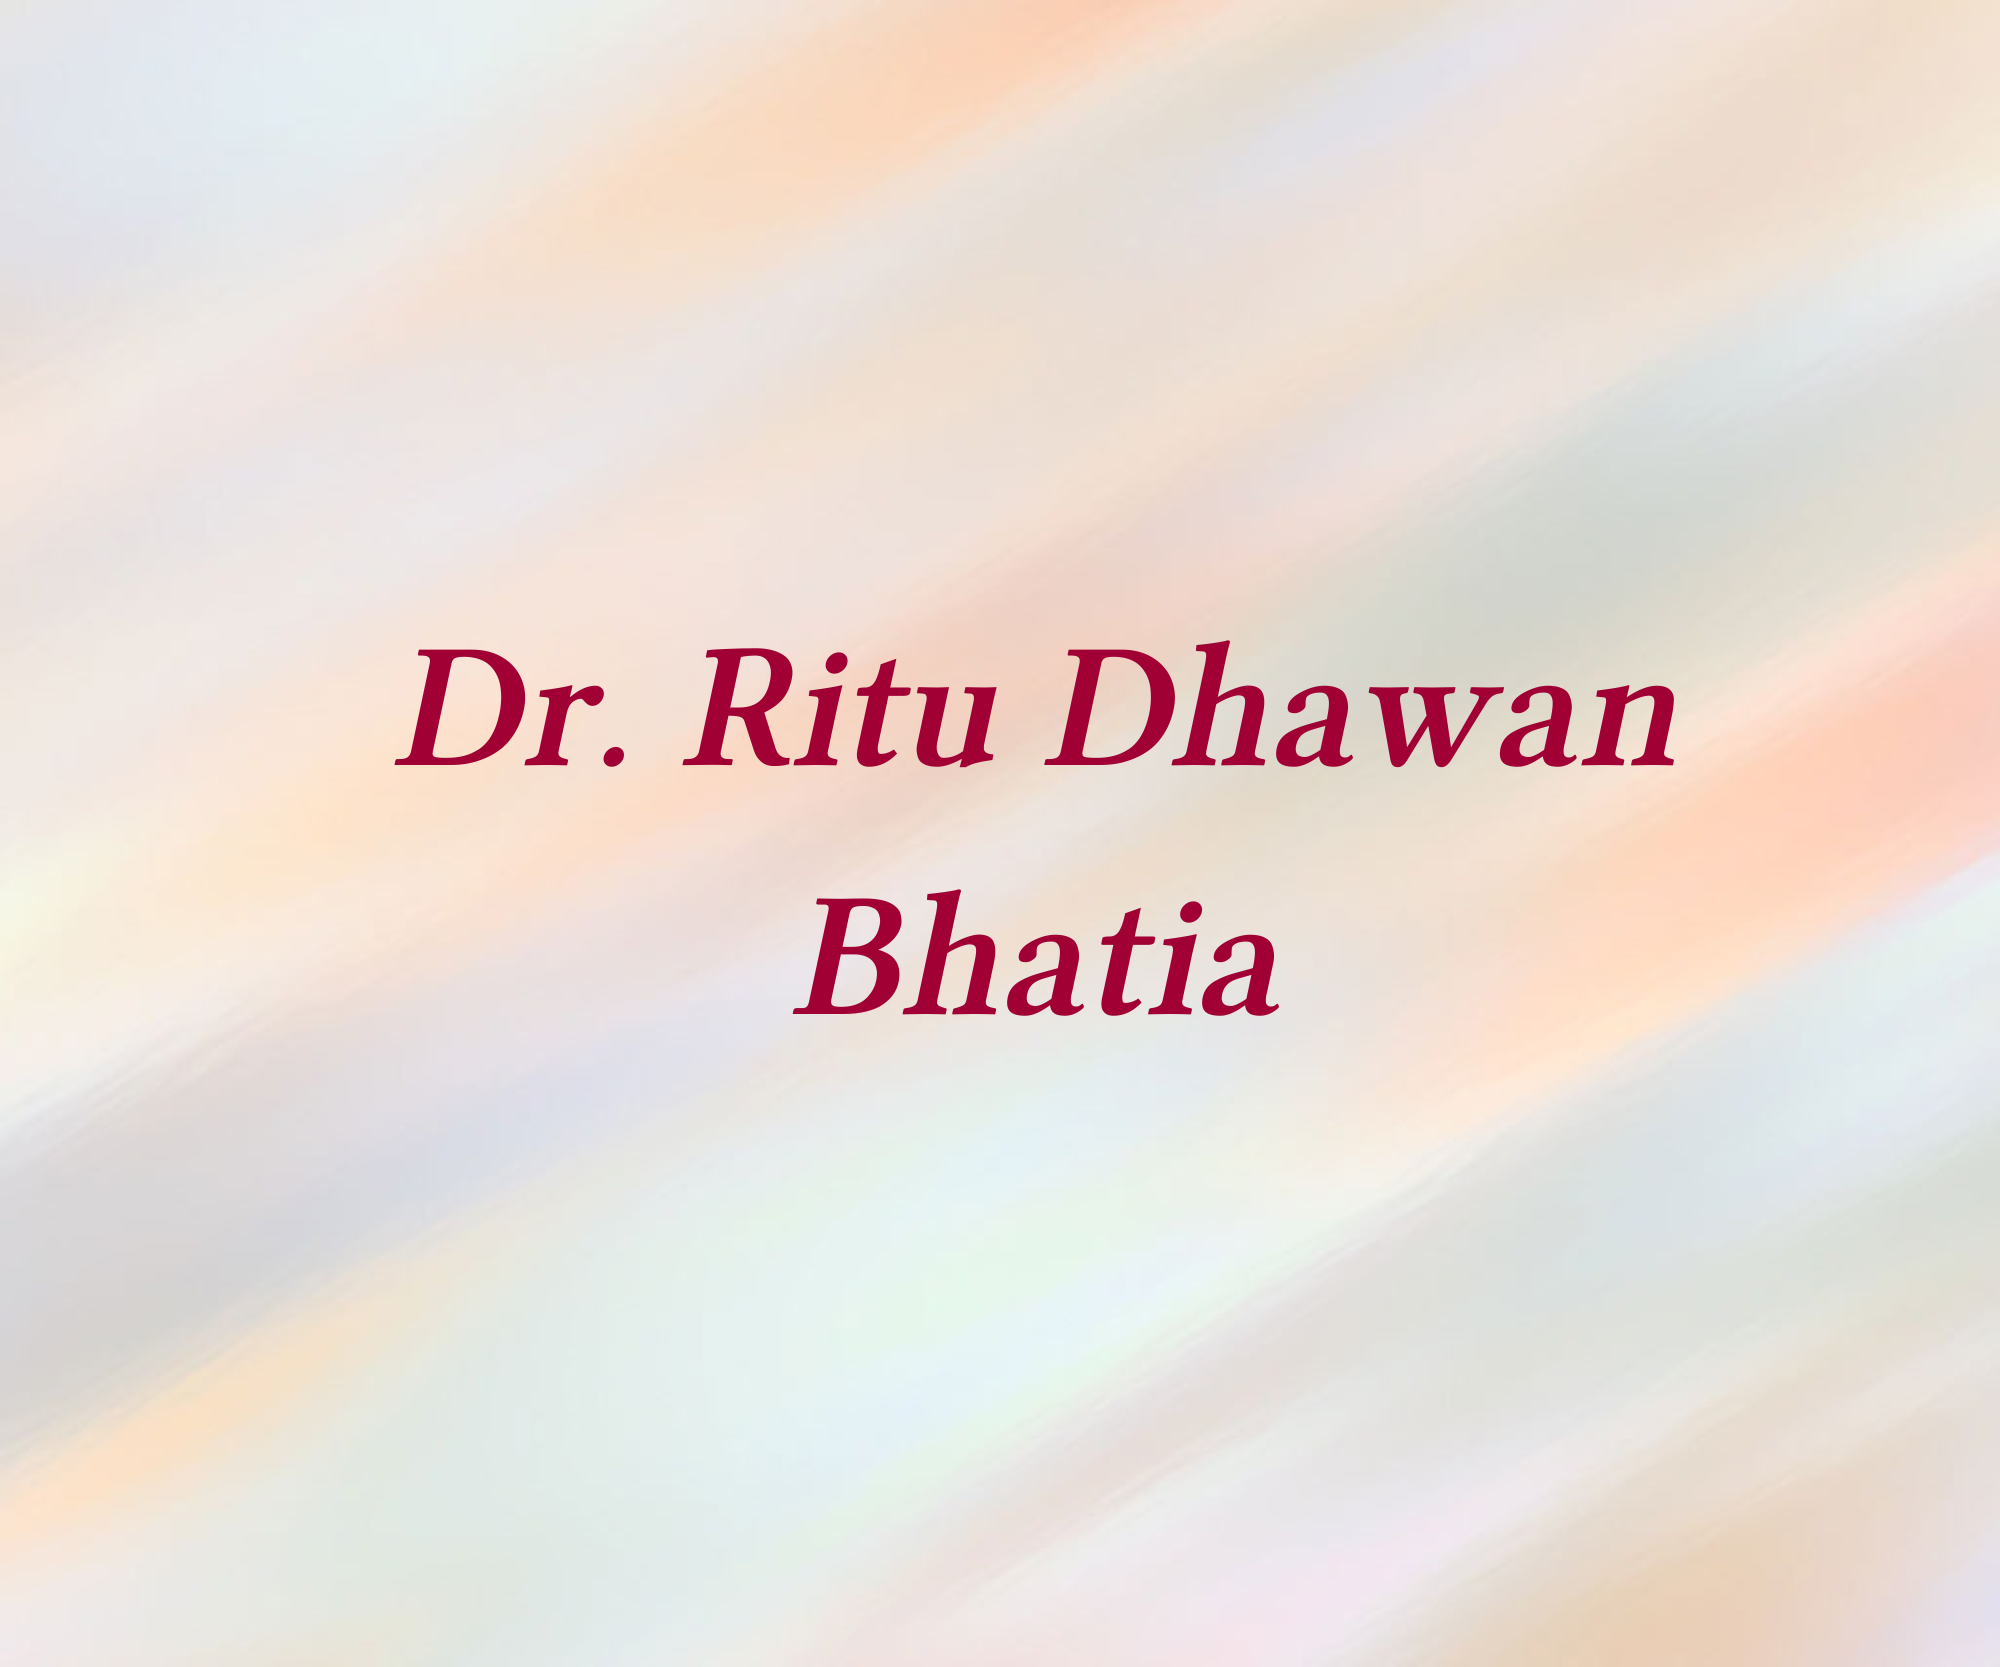 Dr. Ritu Dhawan Bhatia  